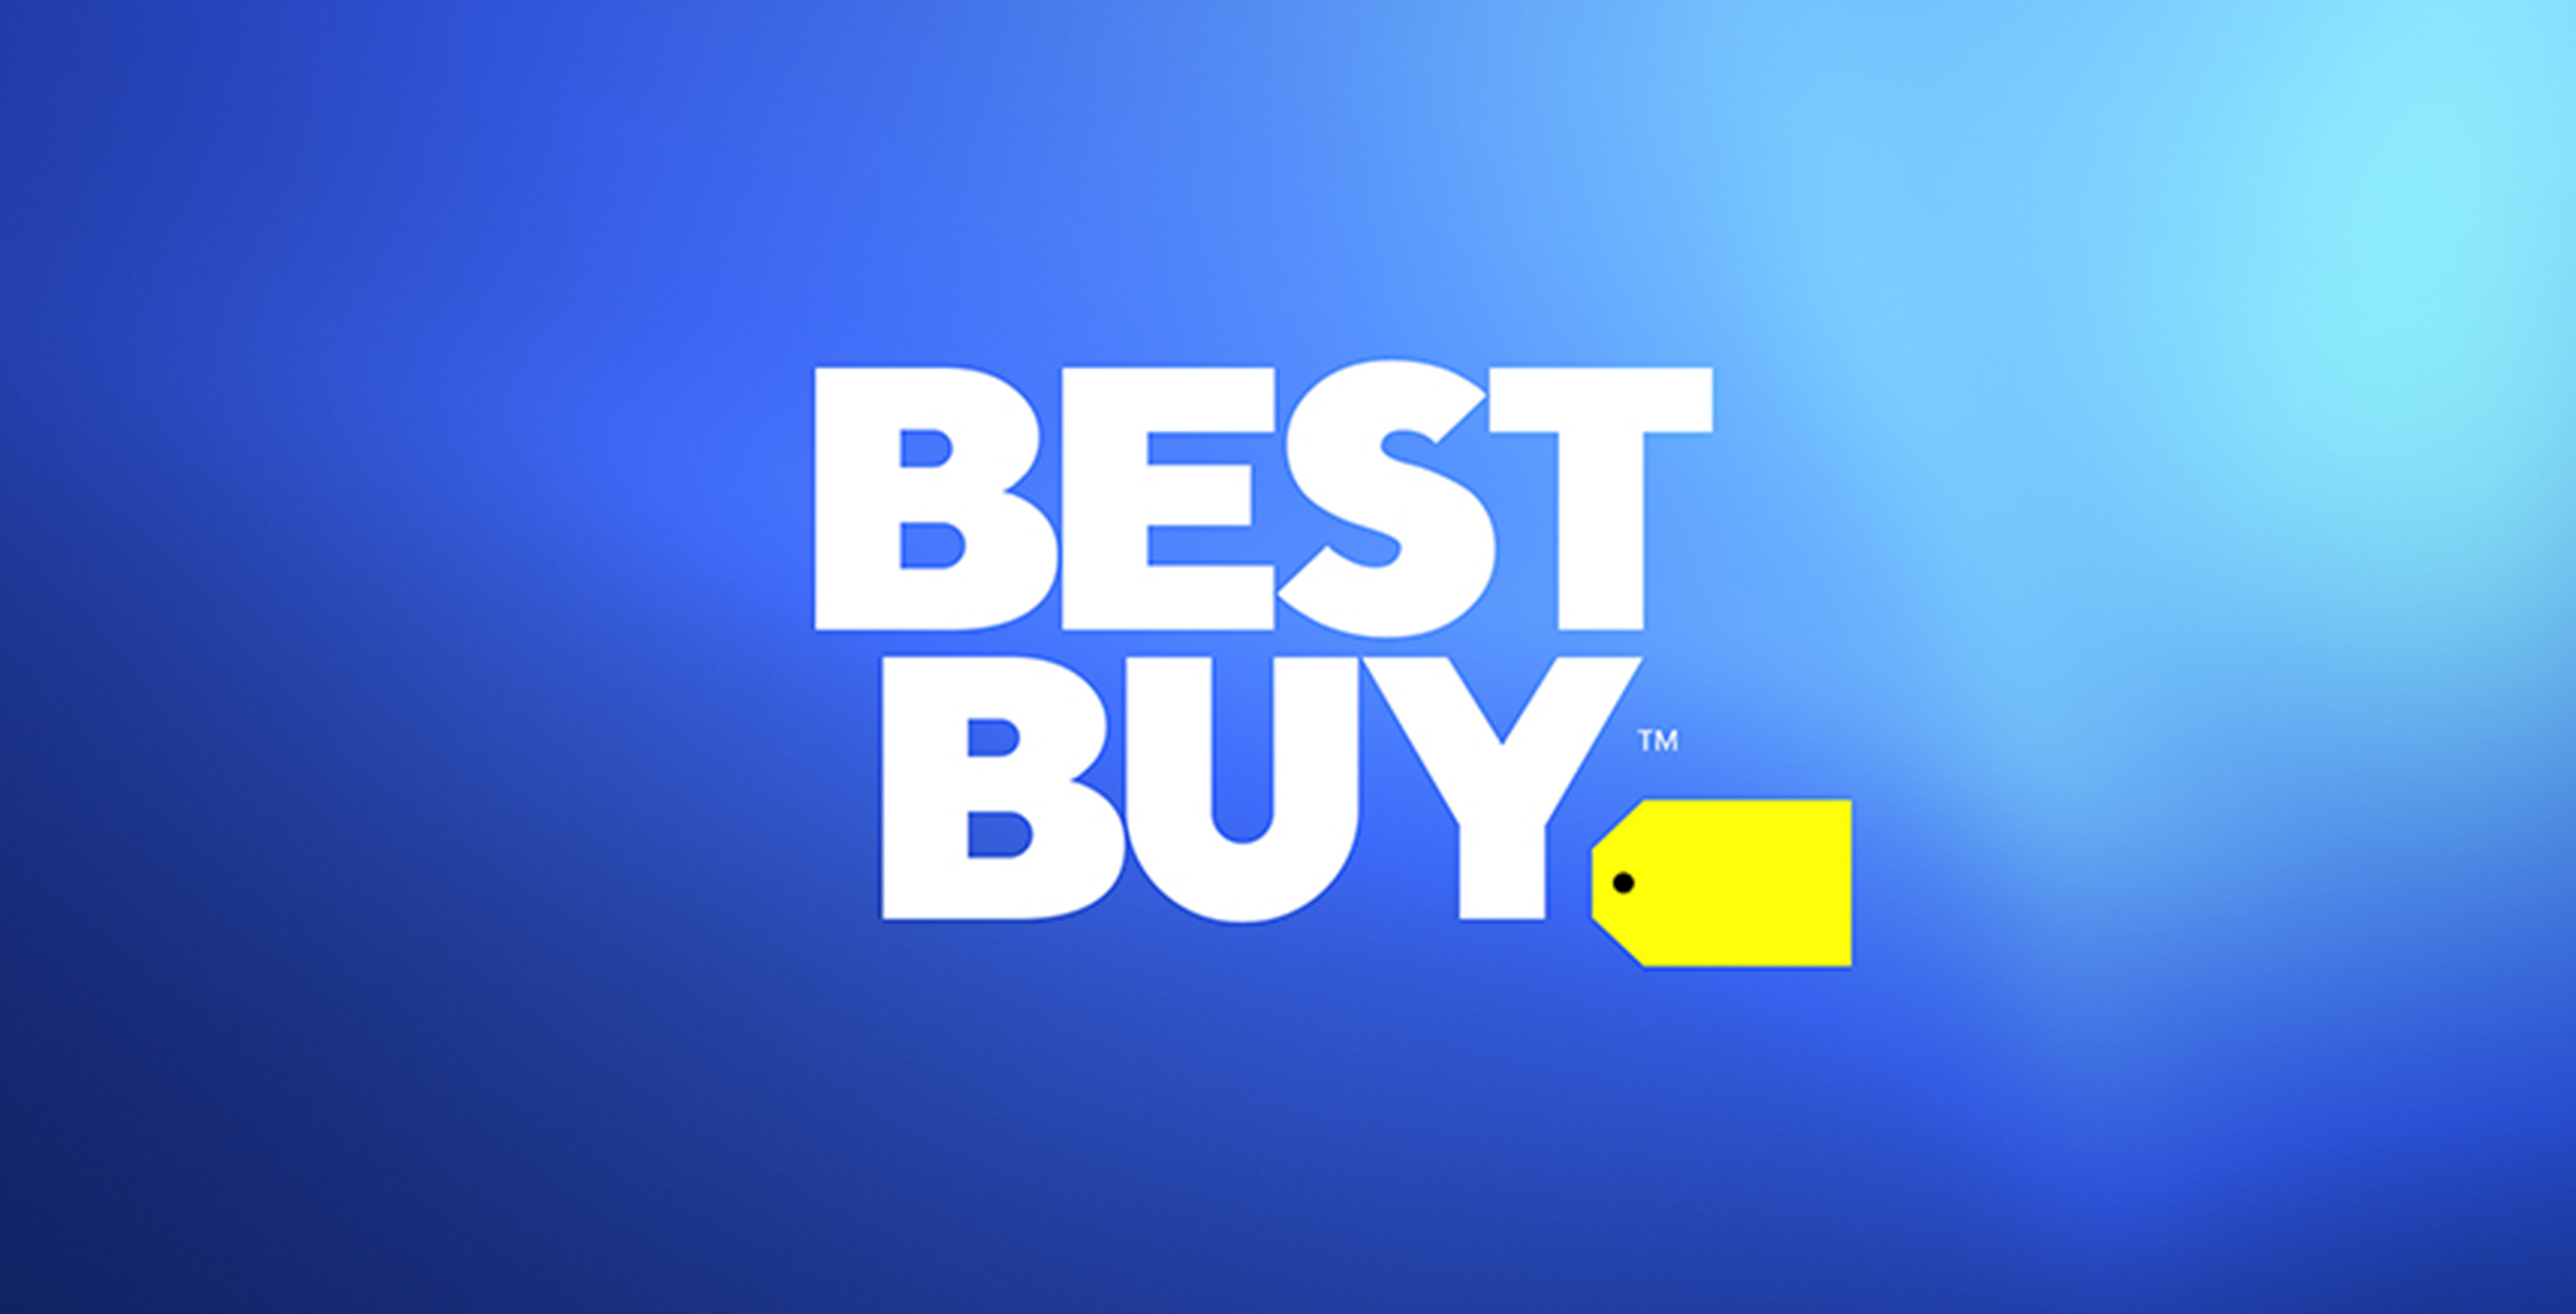 Best Buy Online Shopping Store macy teaming why huntington calif jan ...